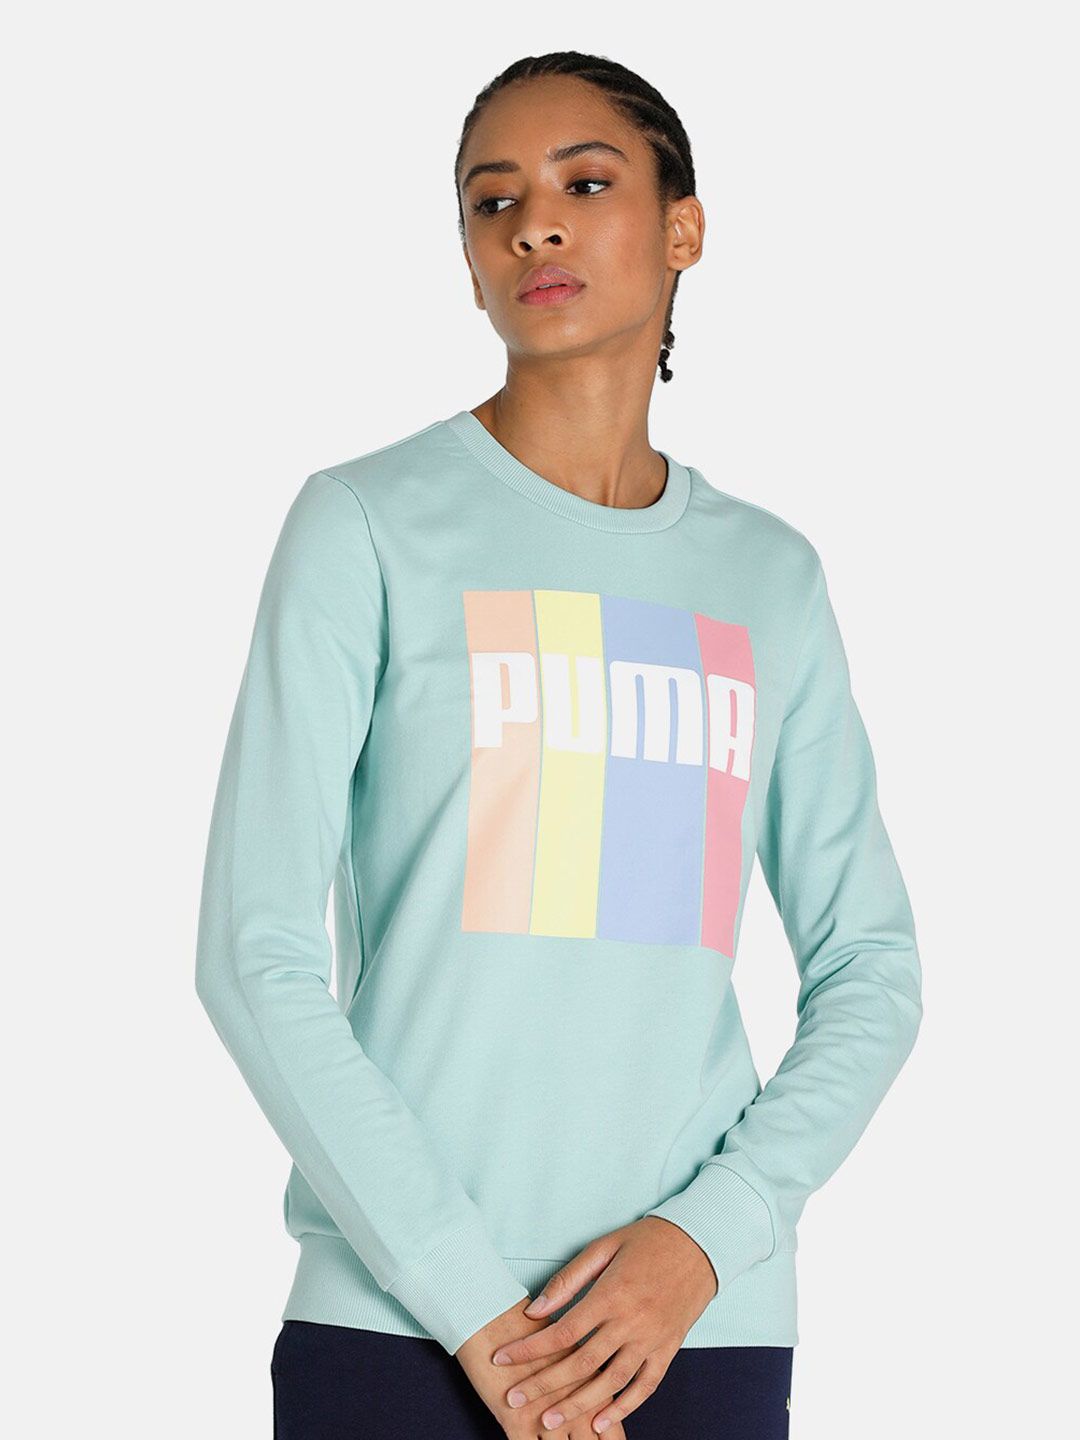 Puma Women Blue Printed Sweatshirt Price in India